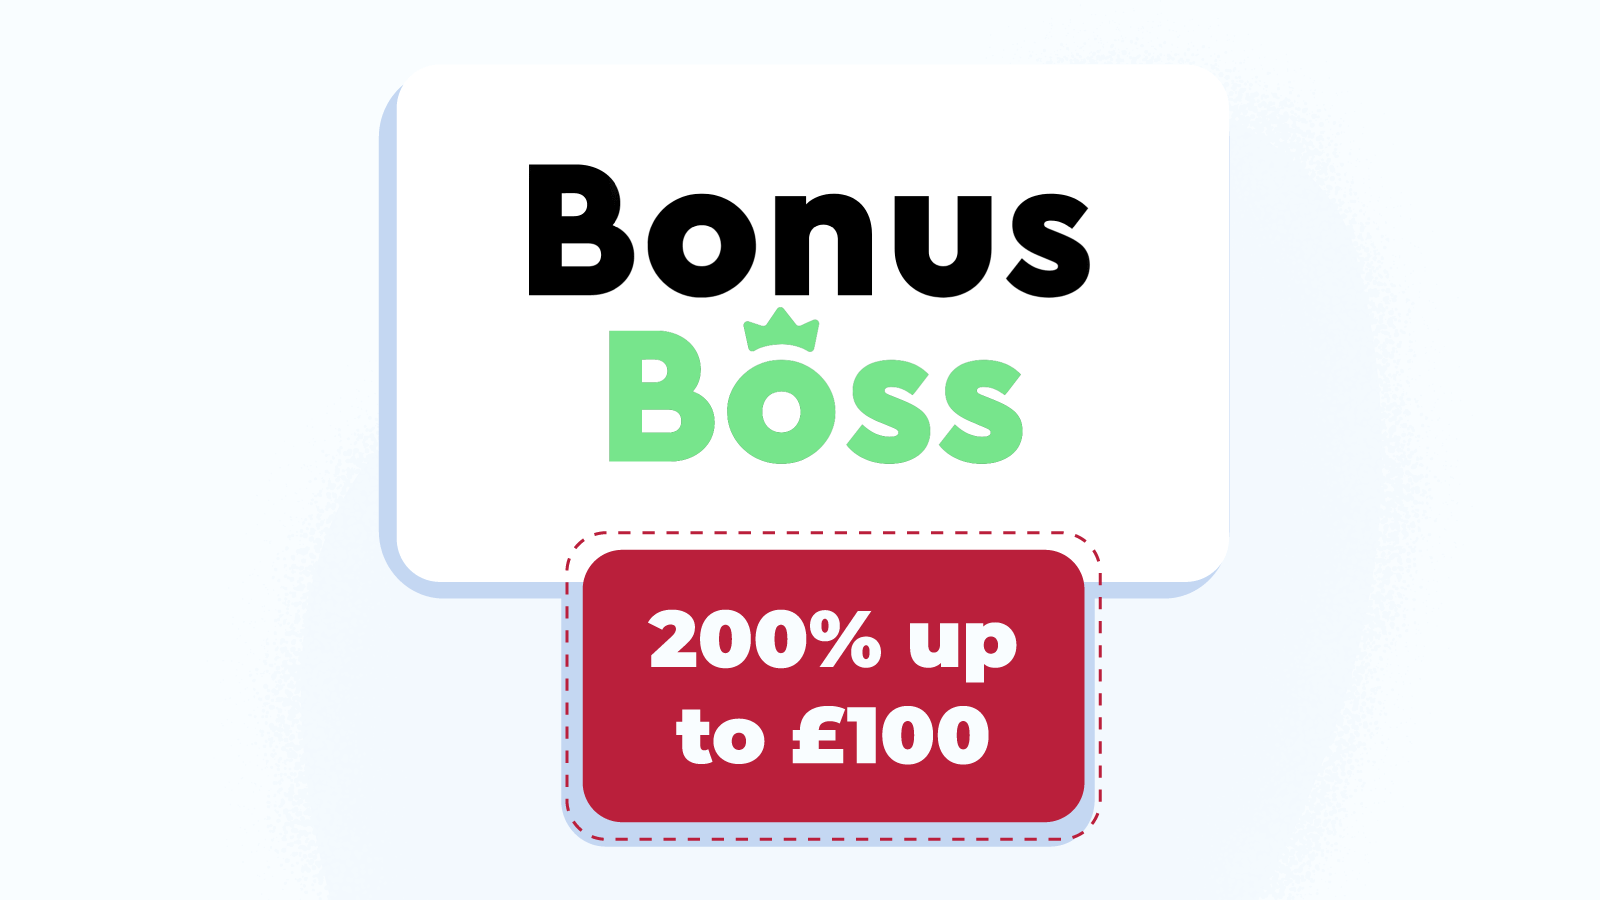 200% up to £100 at Bonus Boss – best 200 first deposit bonus